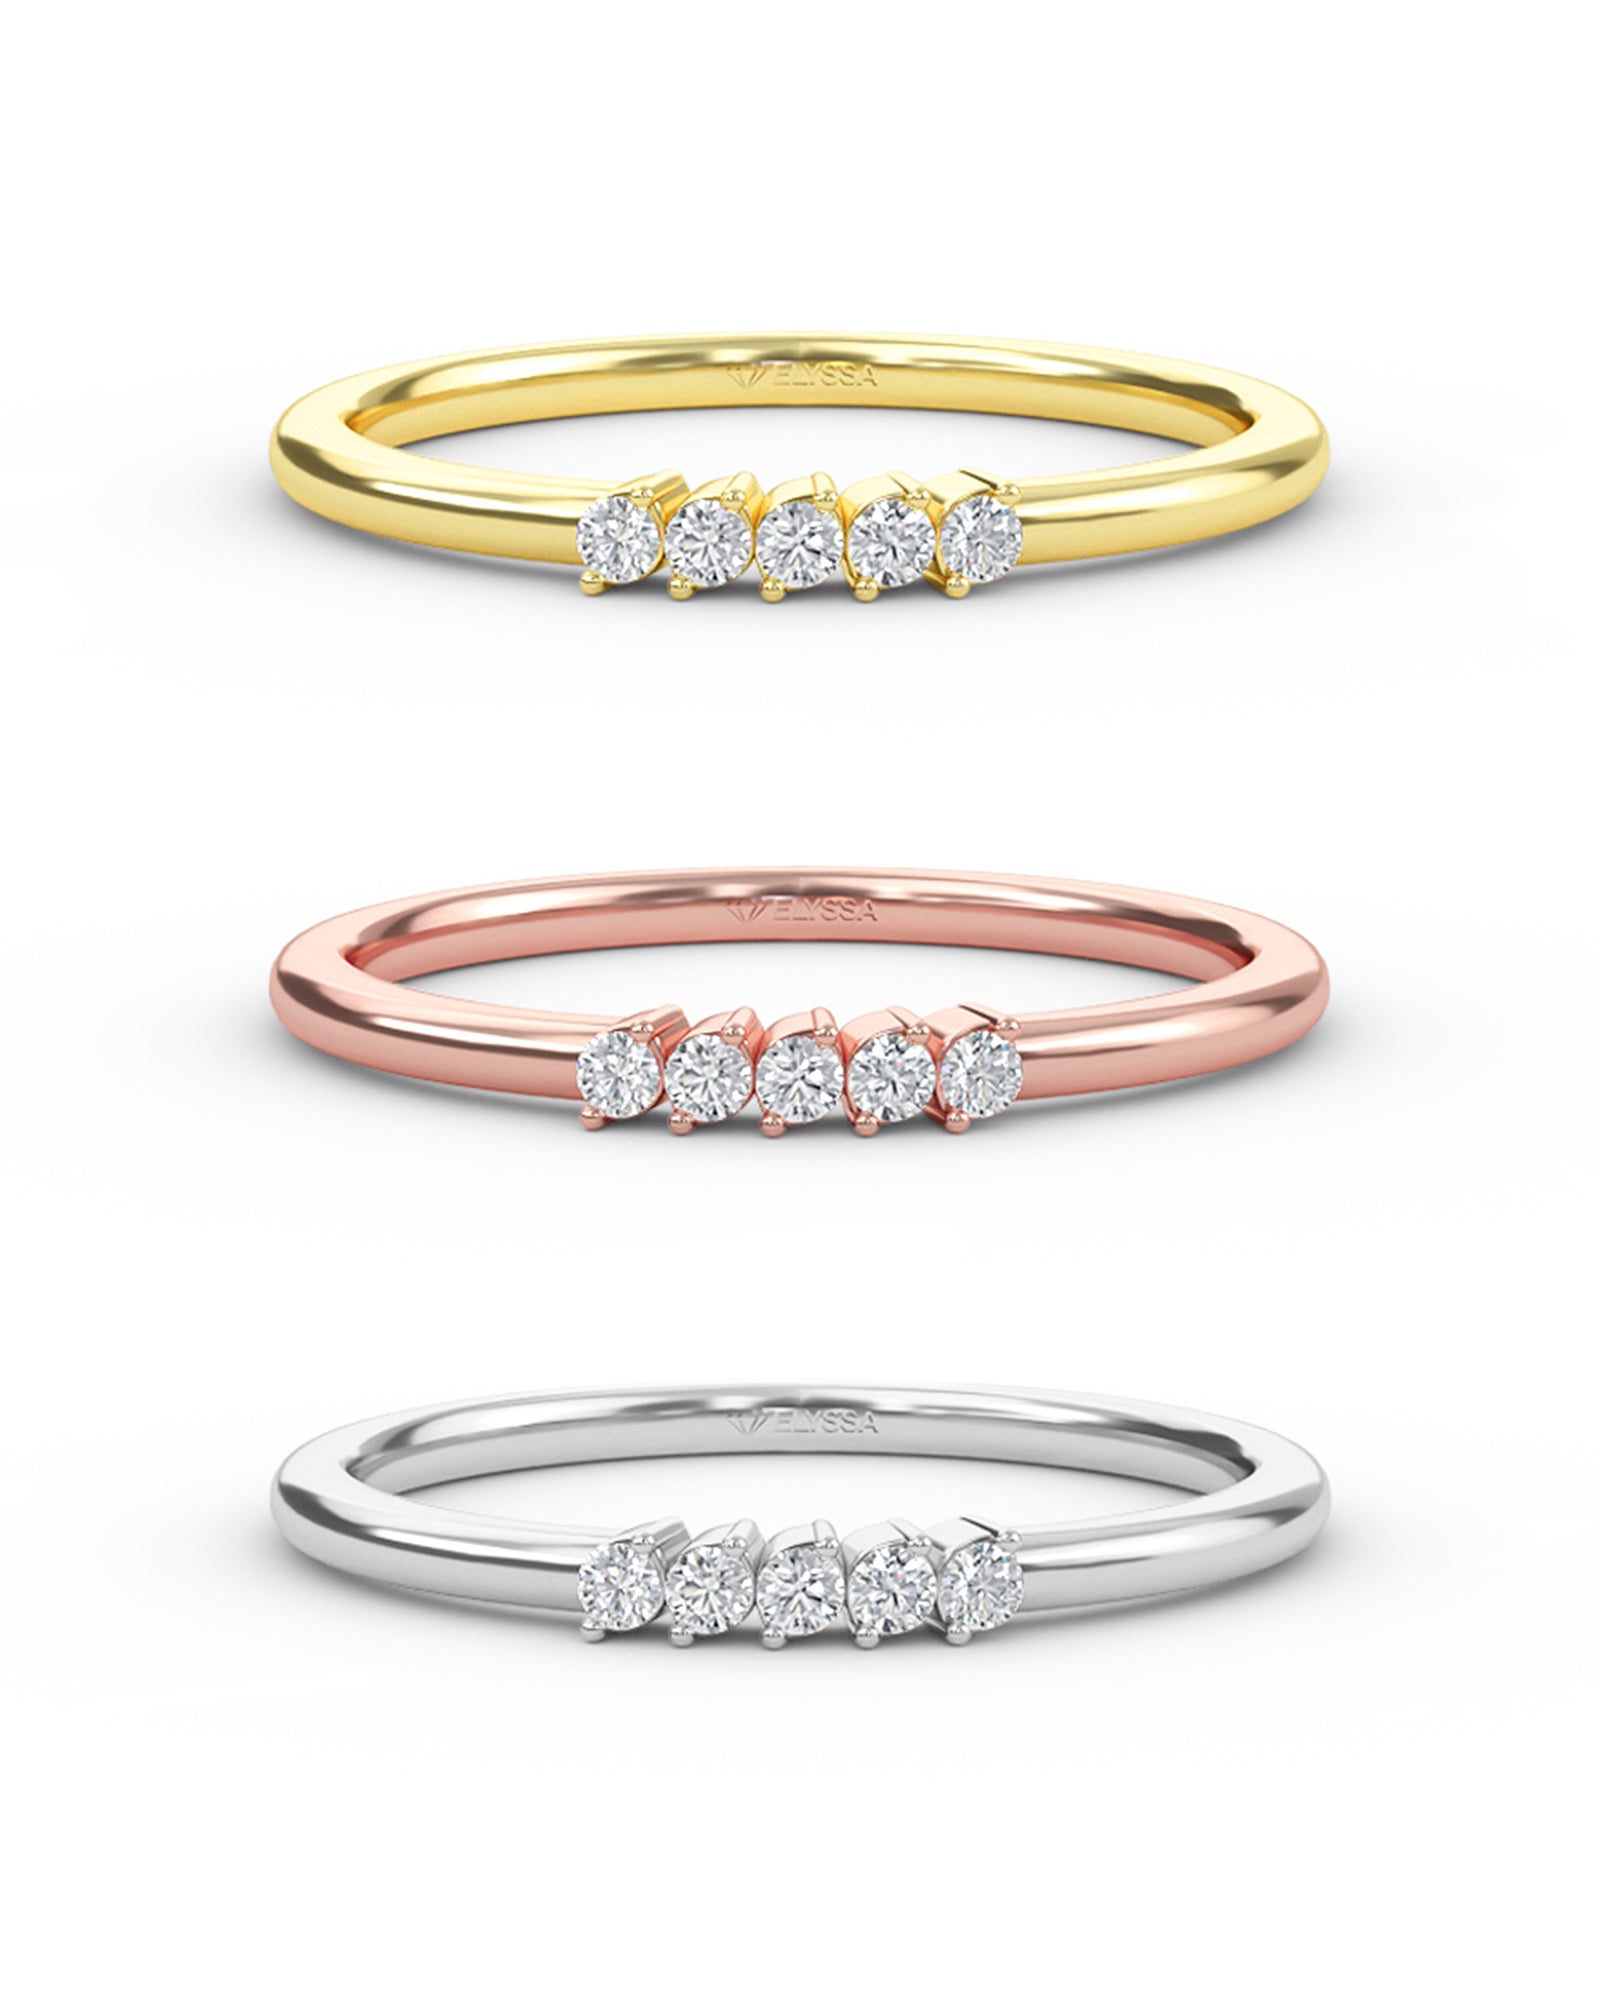 Elyssa Jewelry 5-Stone Diamond Wedding Band in 14K Gold - ring Zengoda Shop online from Artisan Brands